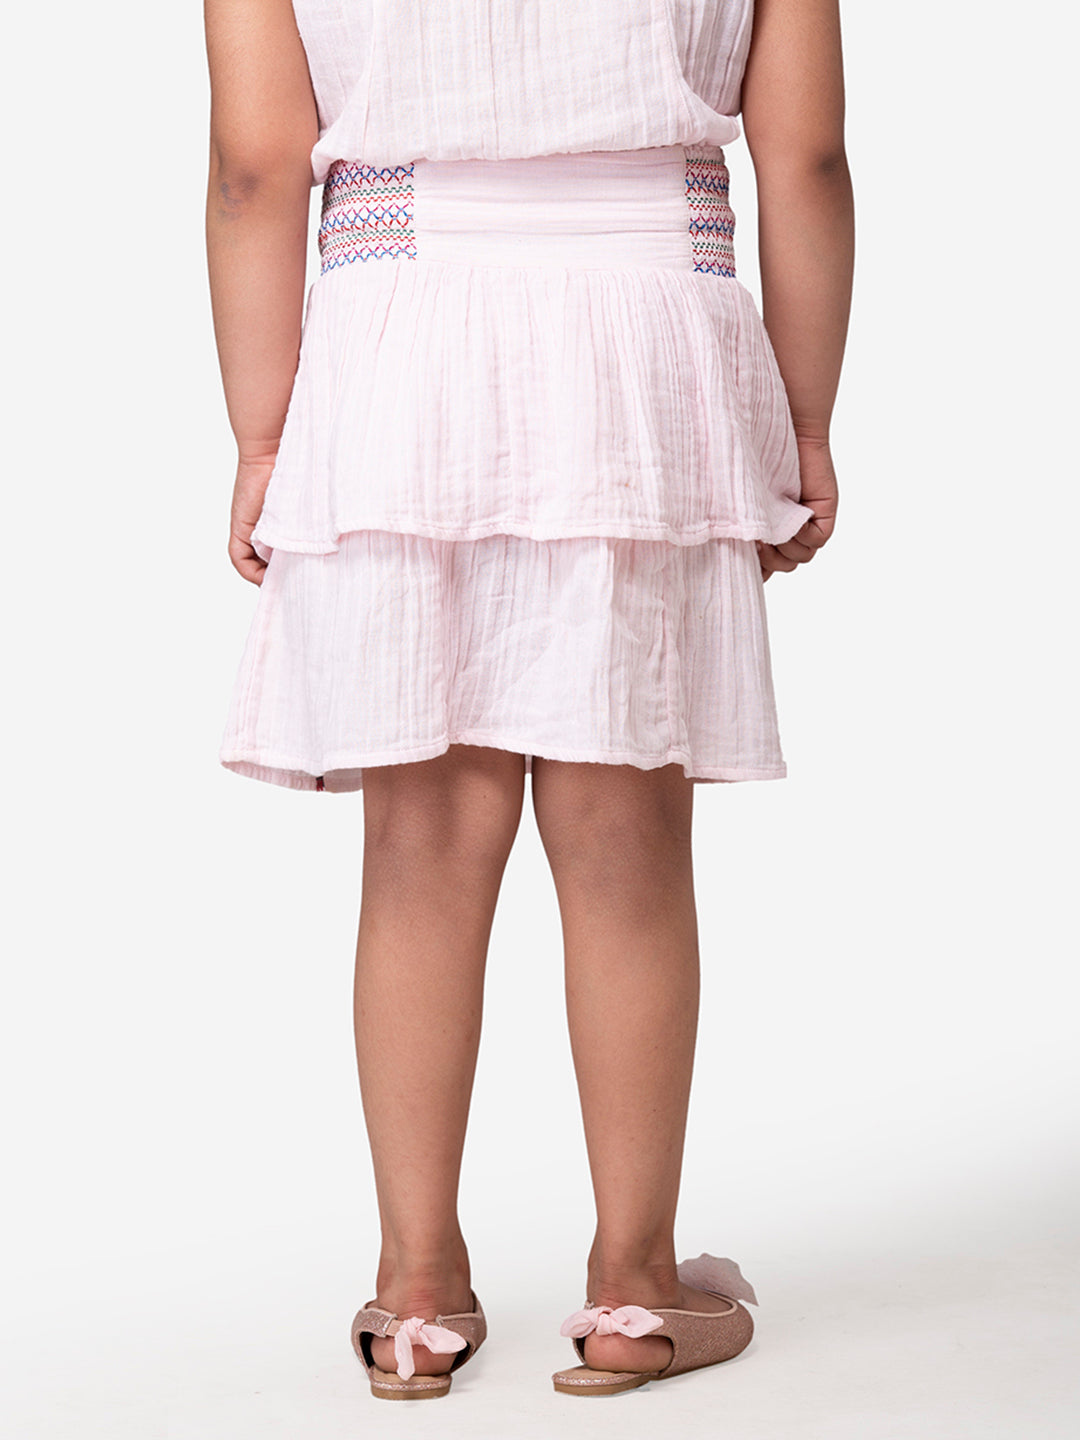 Hoop Hippo Cotton Gauze Pink WHite Girls Skirt